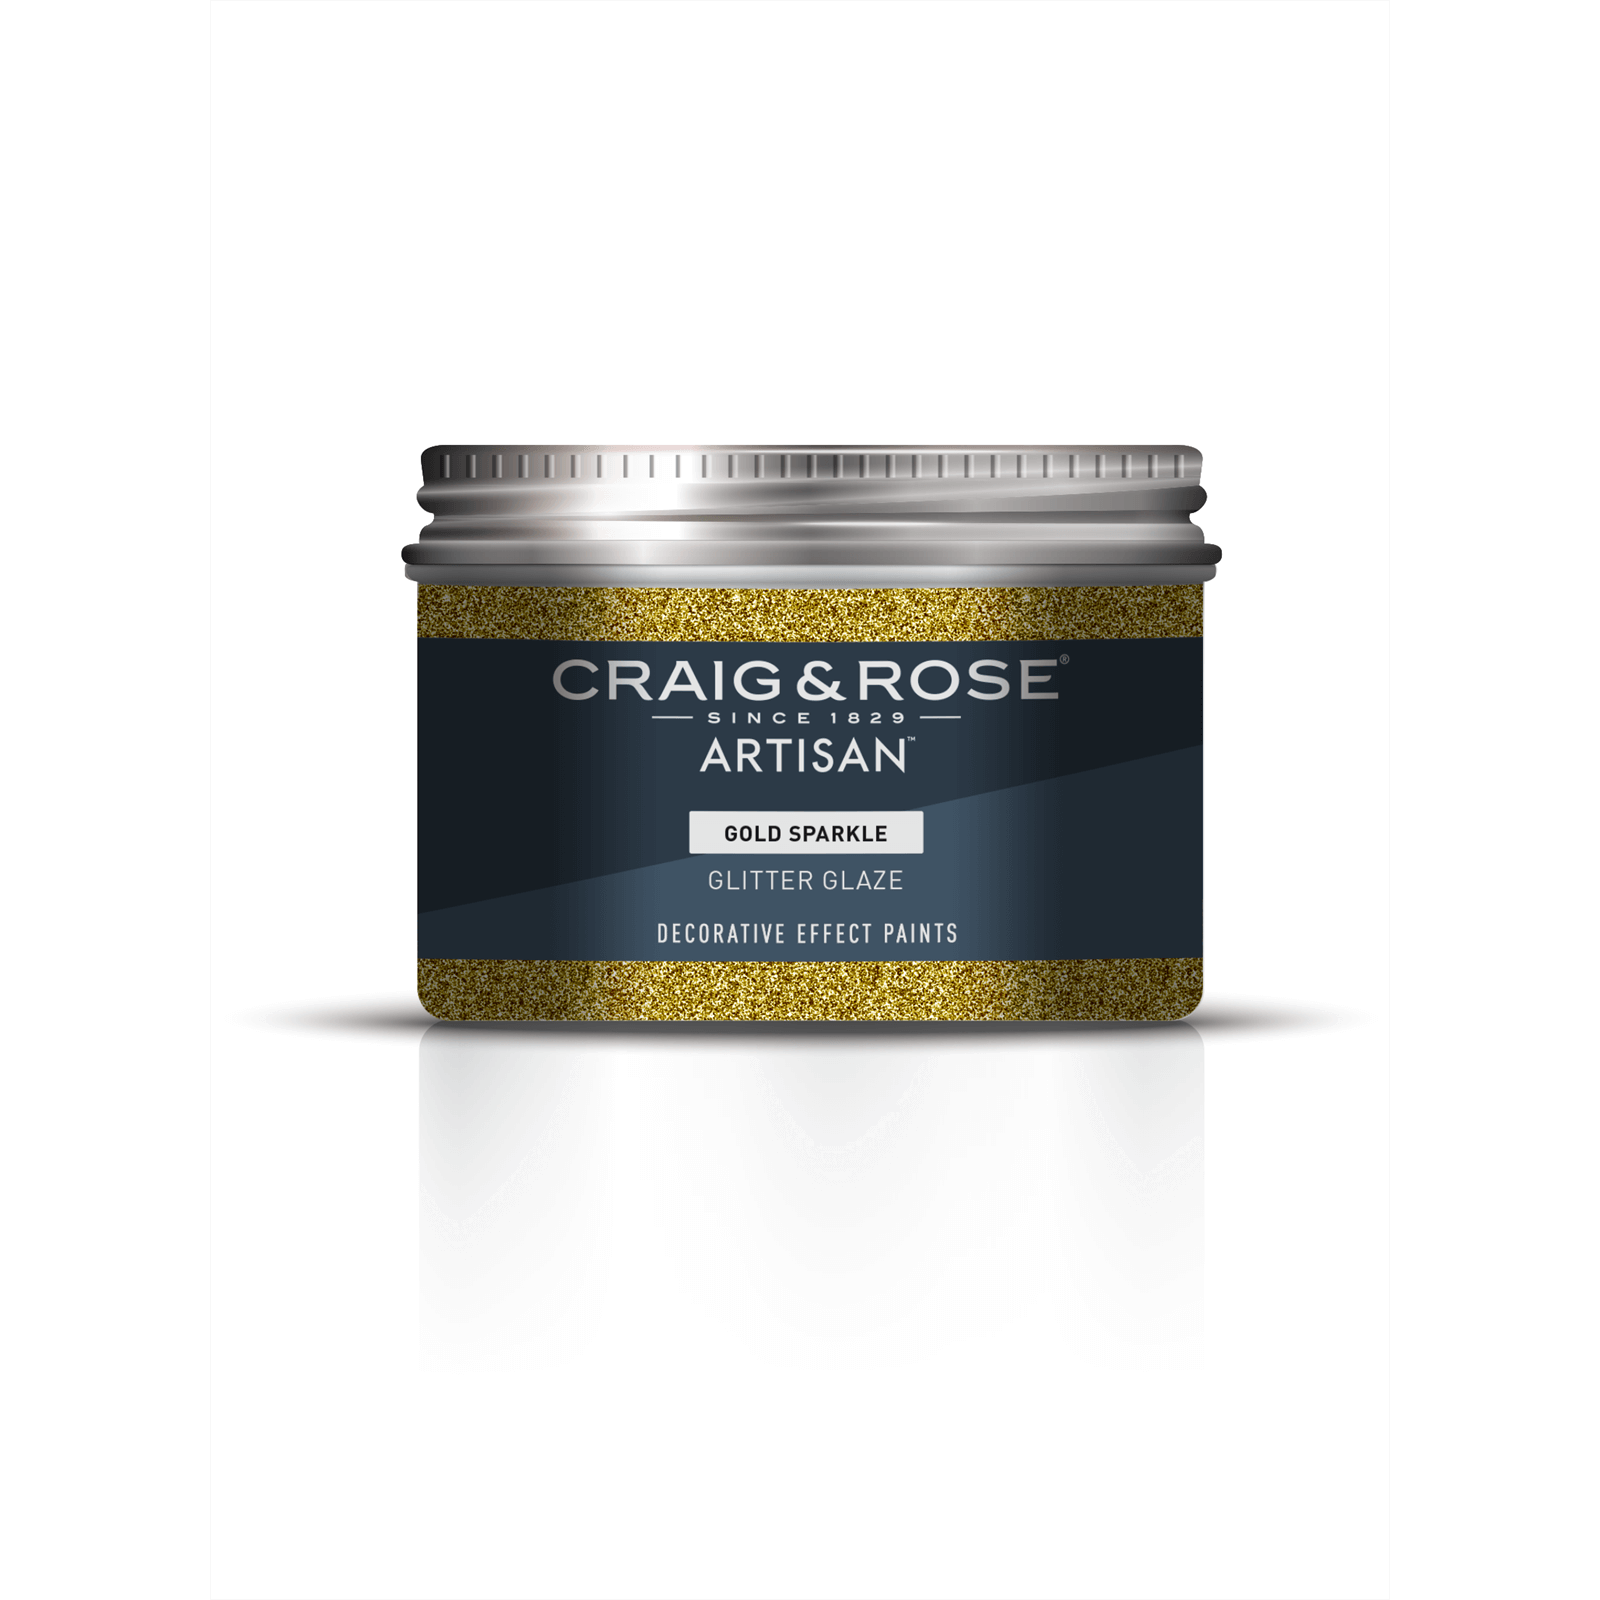 Craig & Rose Artisan Glitter Glaze Paint Gold Sparkle - 300ml